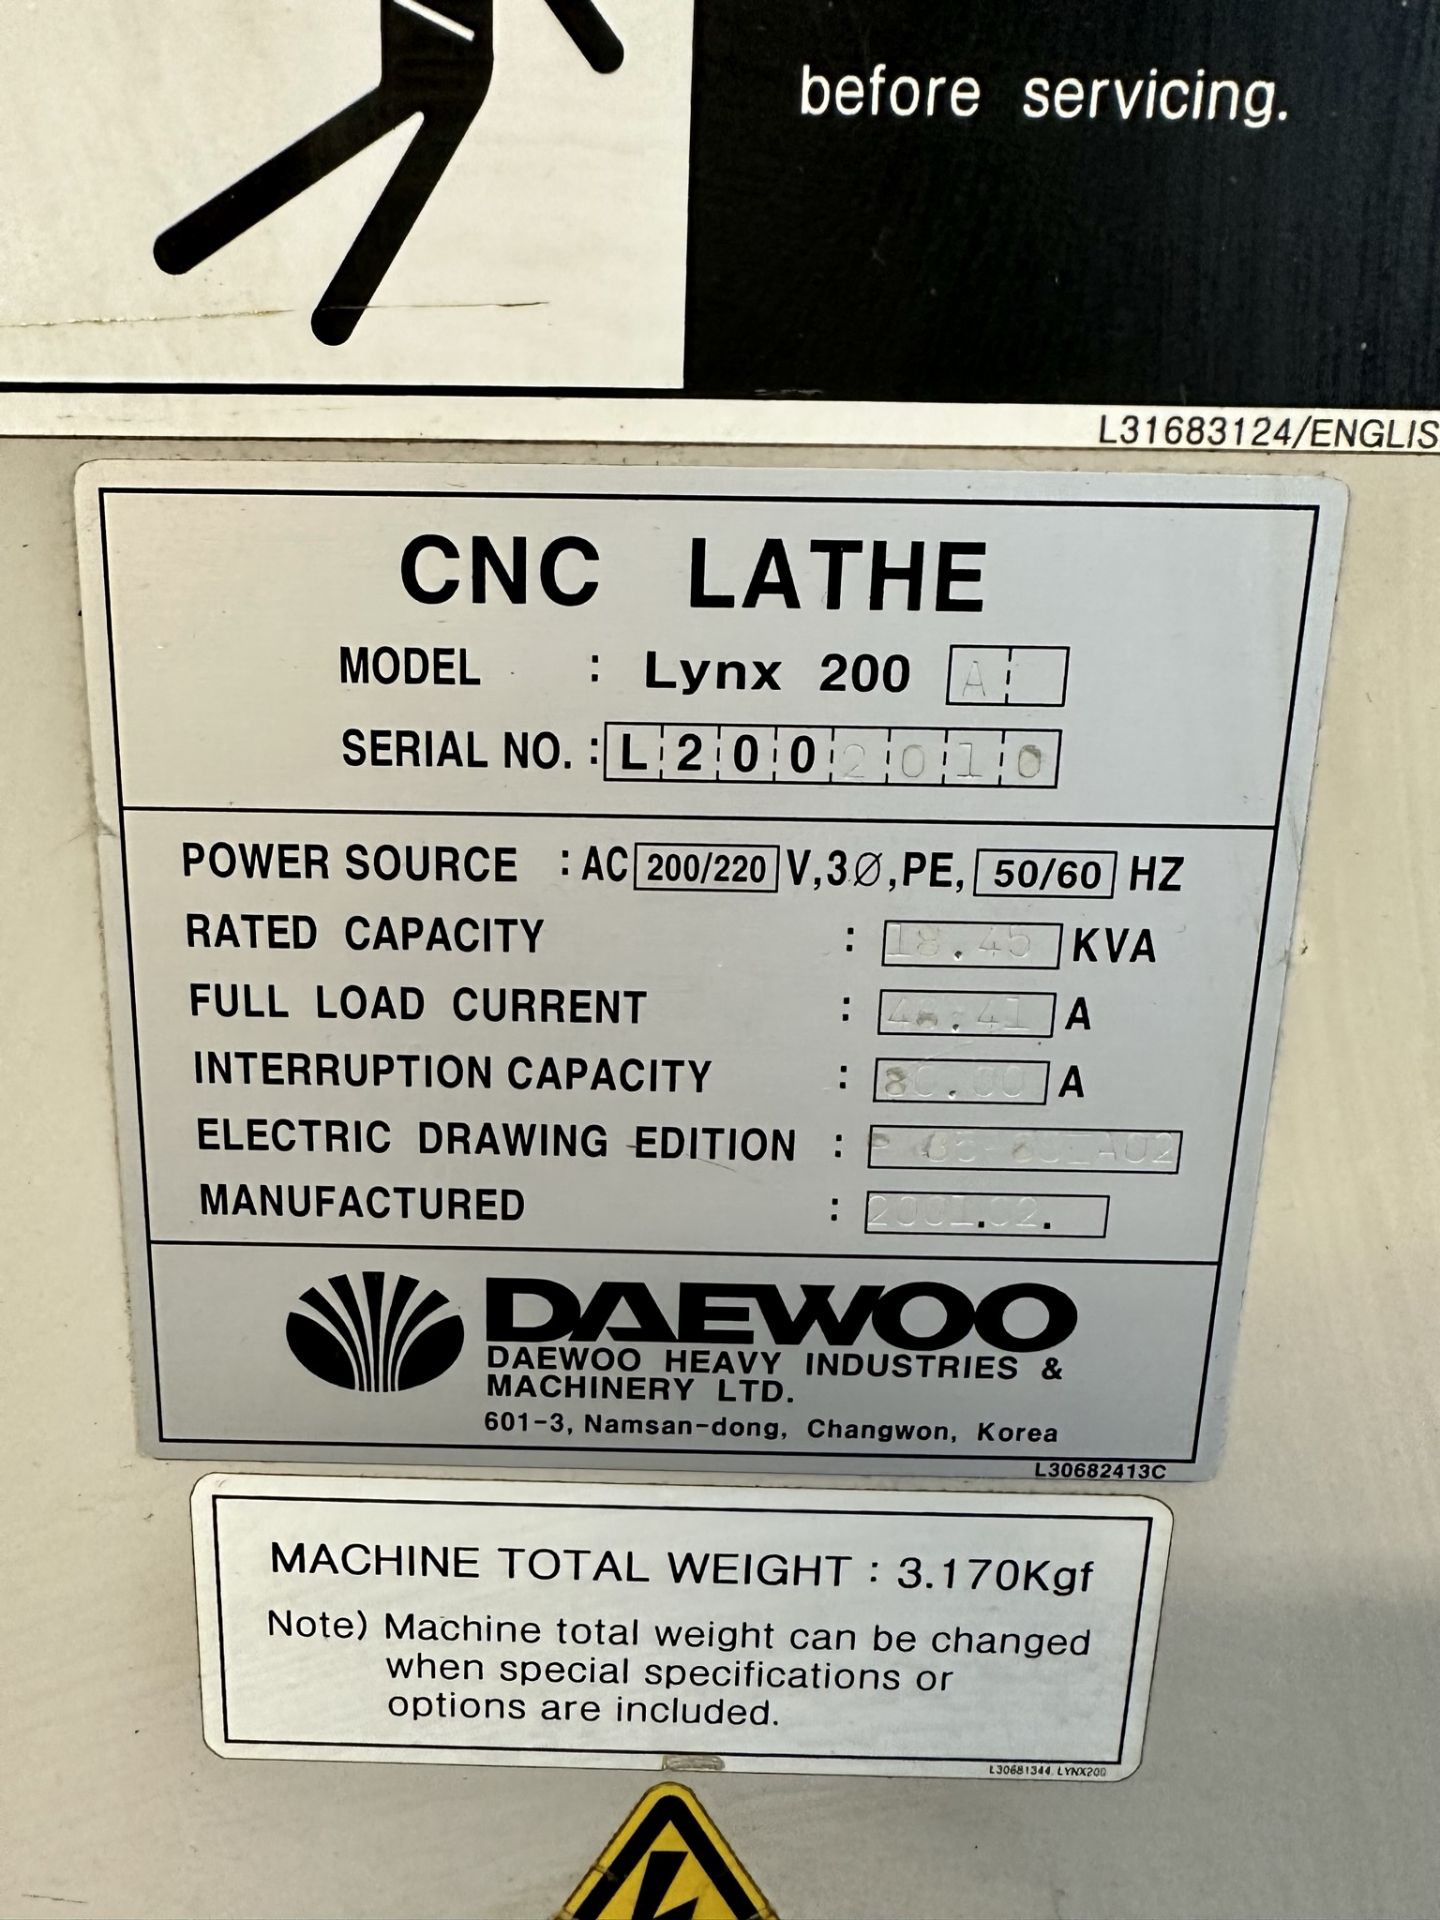 2001 DAEWOO LYNX 200A TURNING CENTER, FANUC SERIES 21i-T CNC CONTROL, 2-AXIS, 6" KITAGAWA CHUCK, - Image 11 of 12